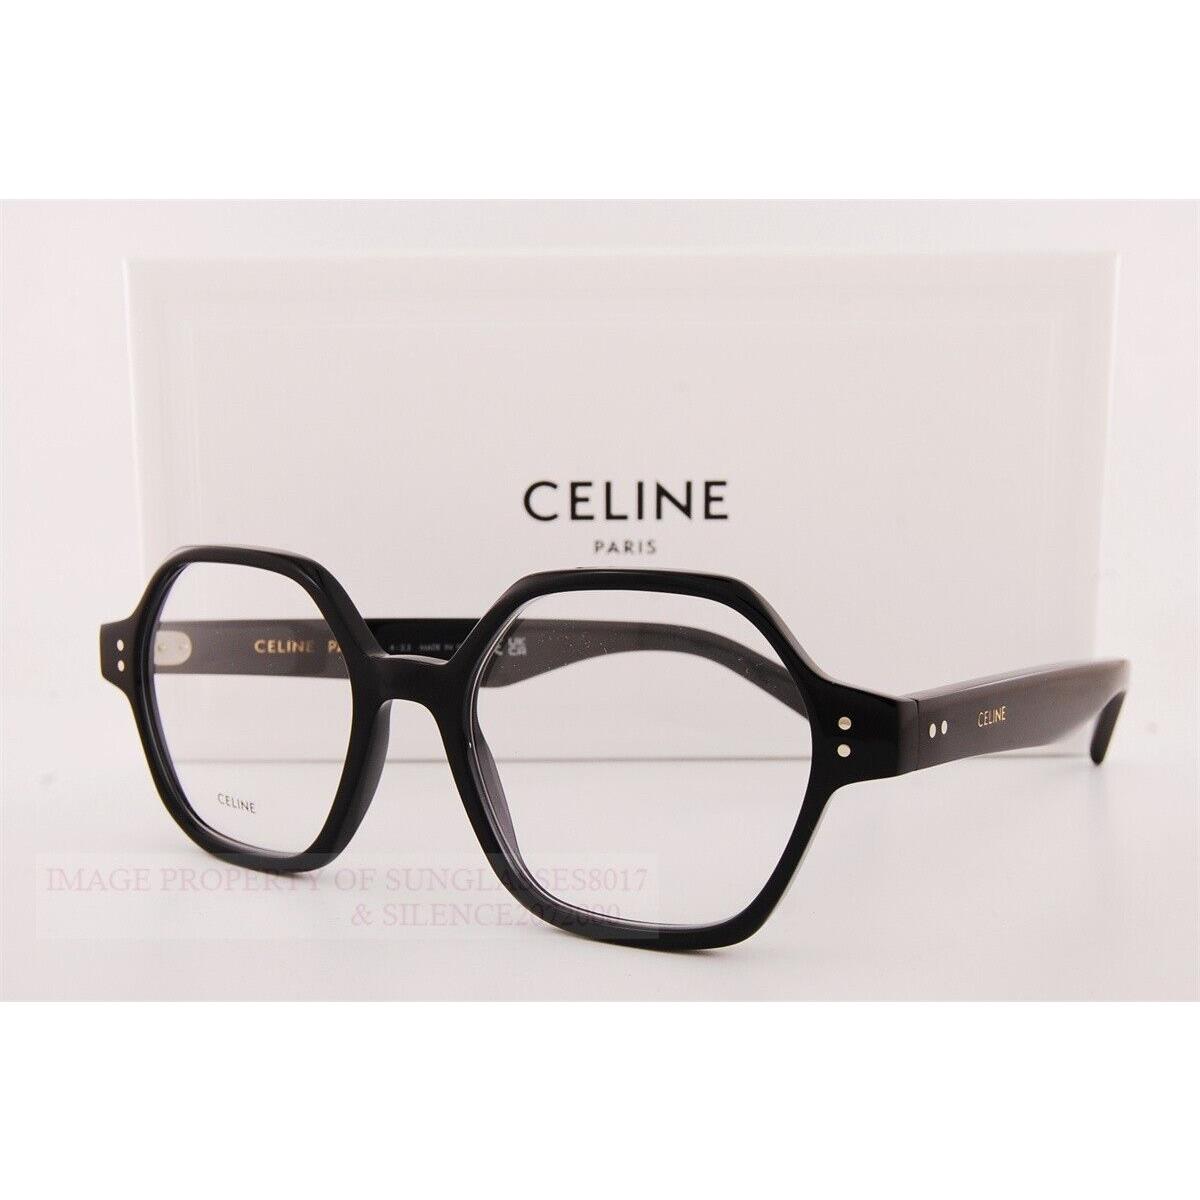 Celine Eyeglass Frames CL 50142I 001 Black For Women Size 51mm